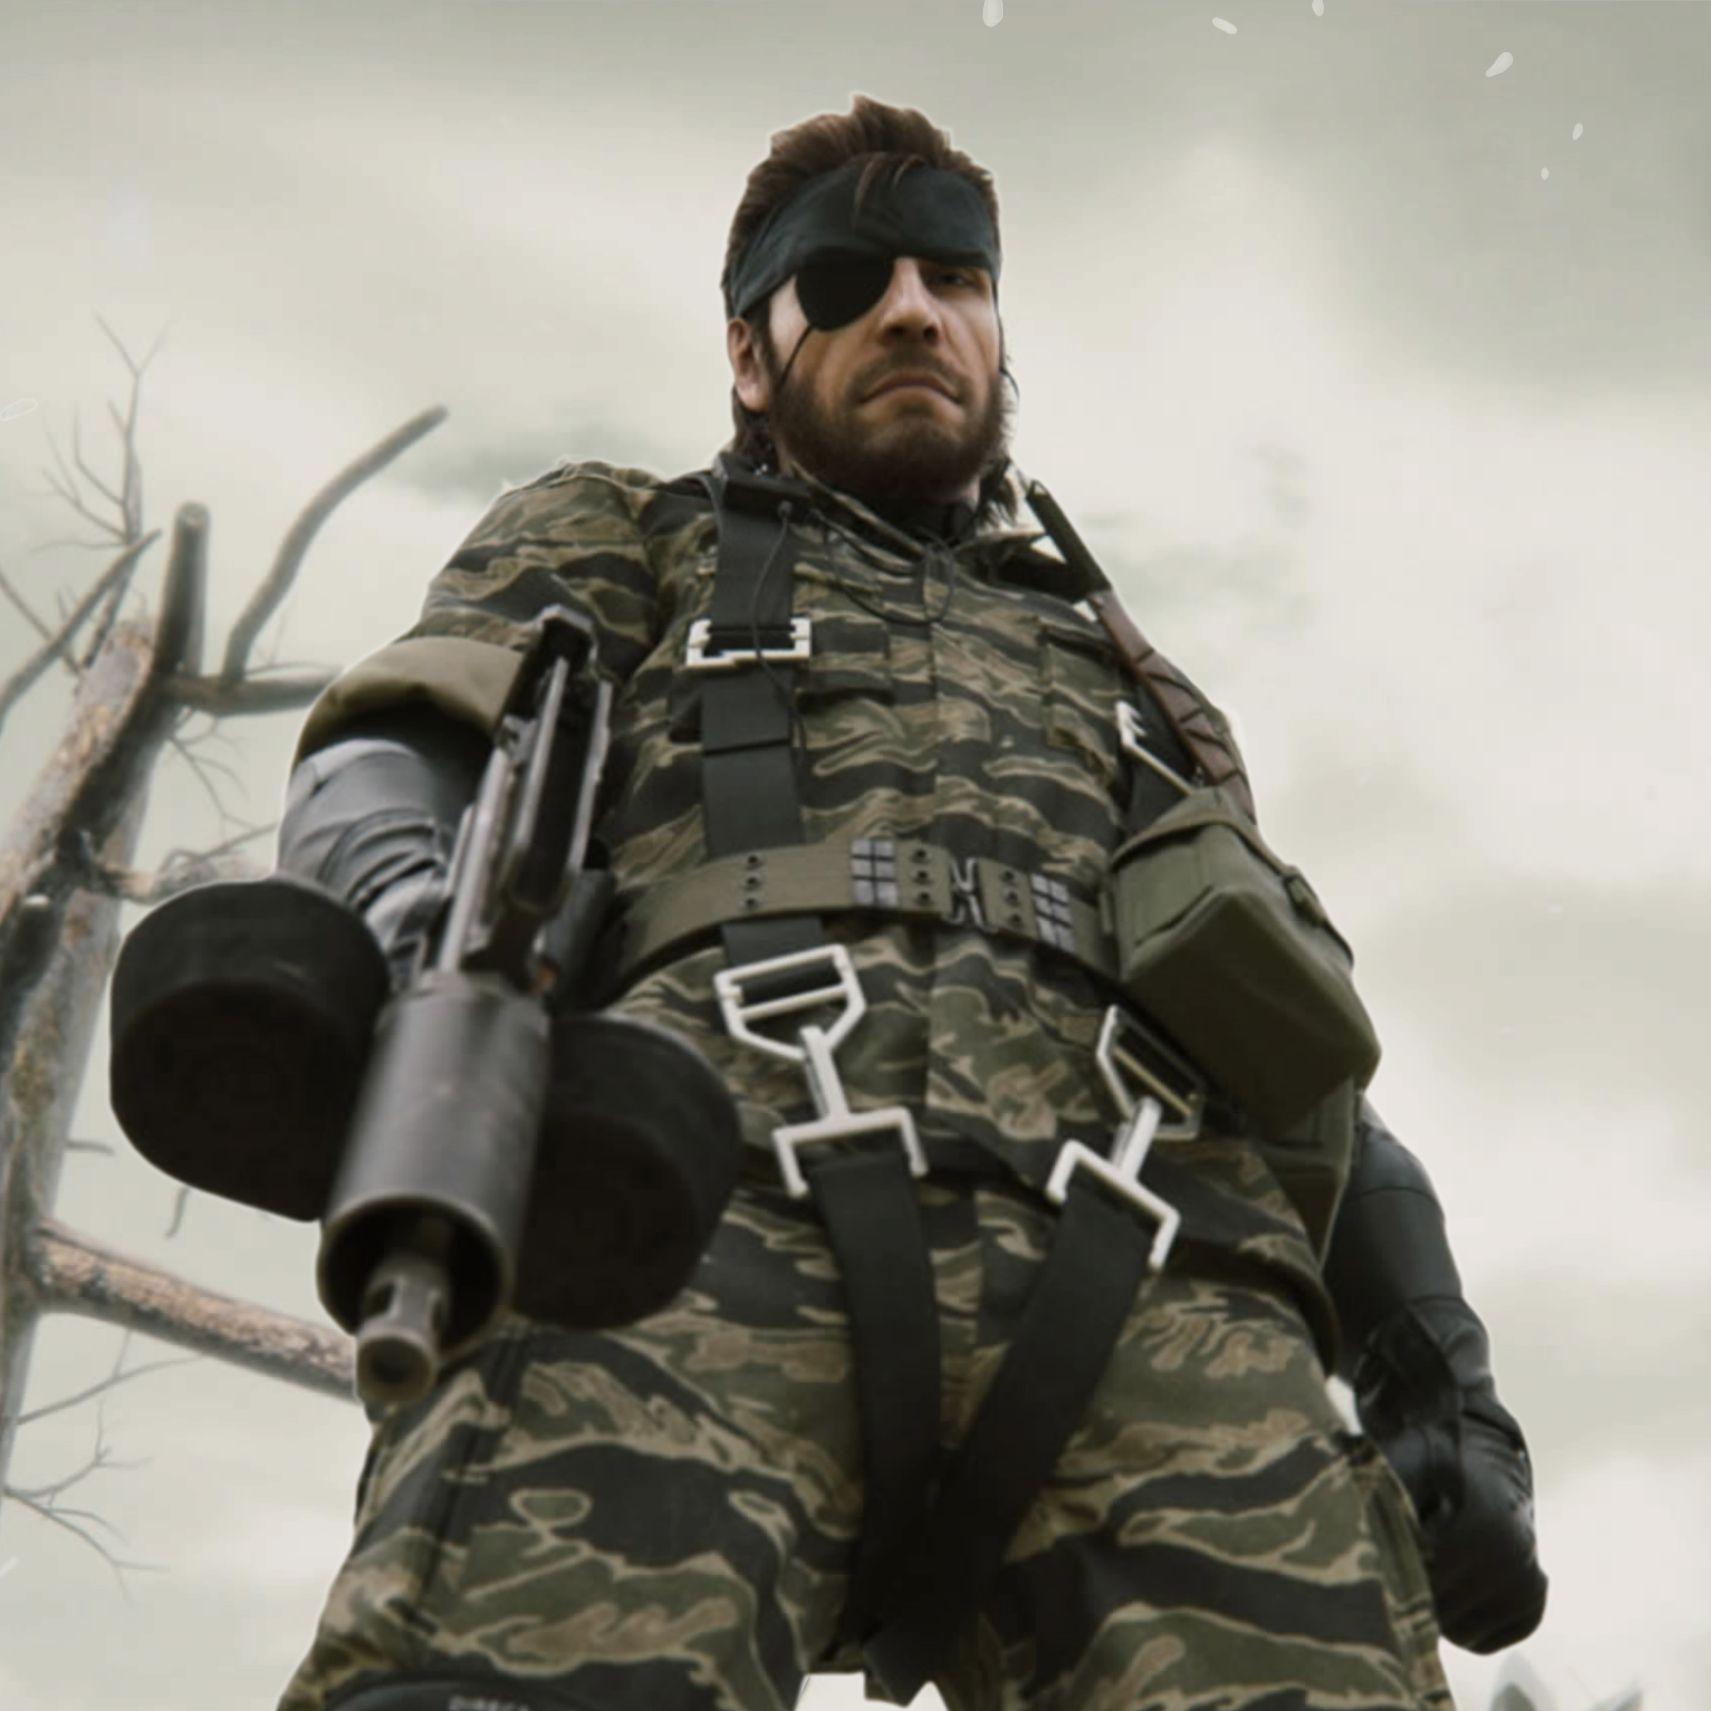 Metal Gear Solid Snake Wallpapers Top Free Metal Gear Solid Snake Backgrounds Wallpaperaccess